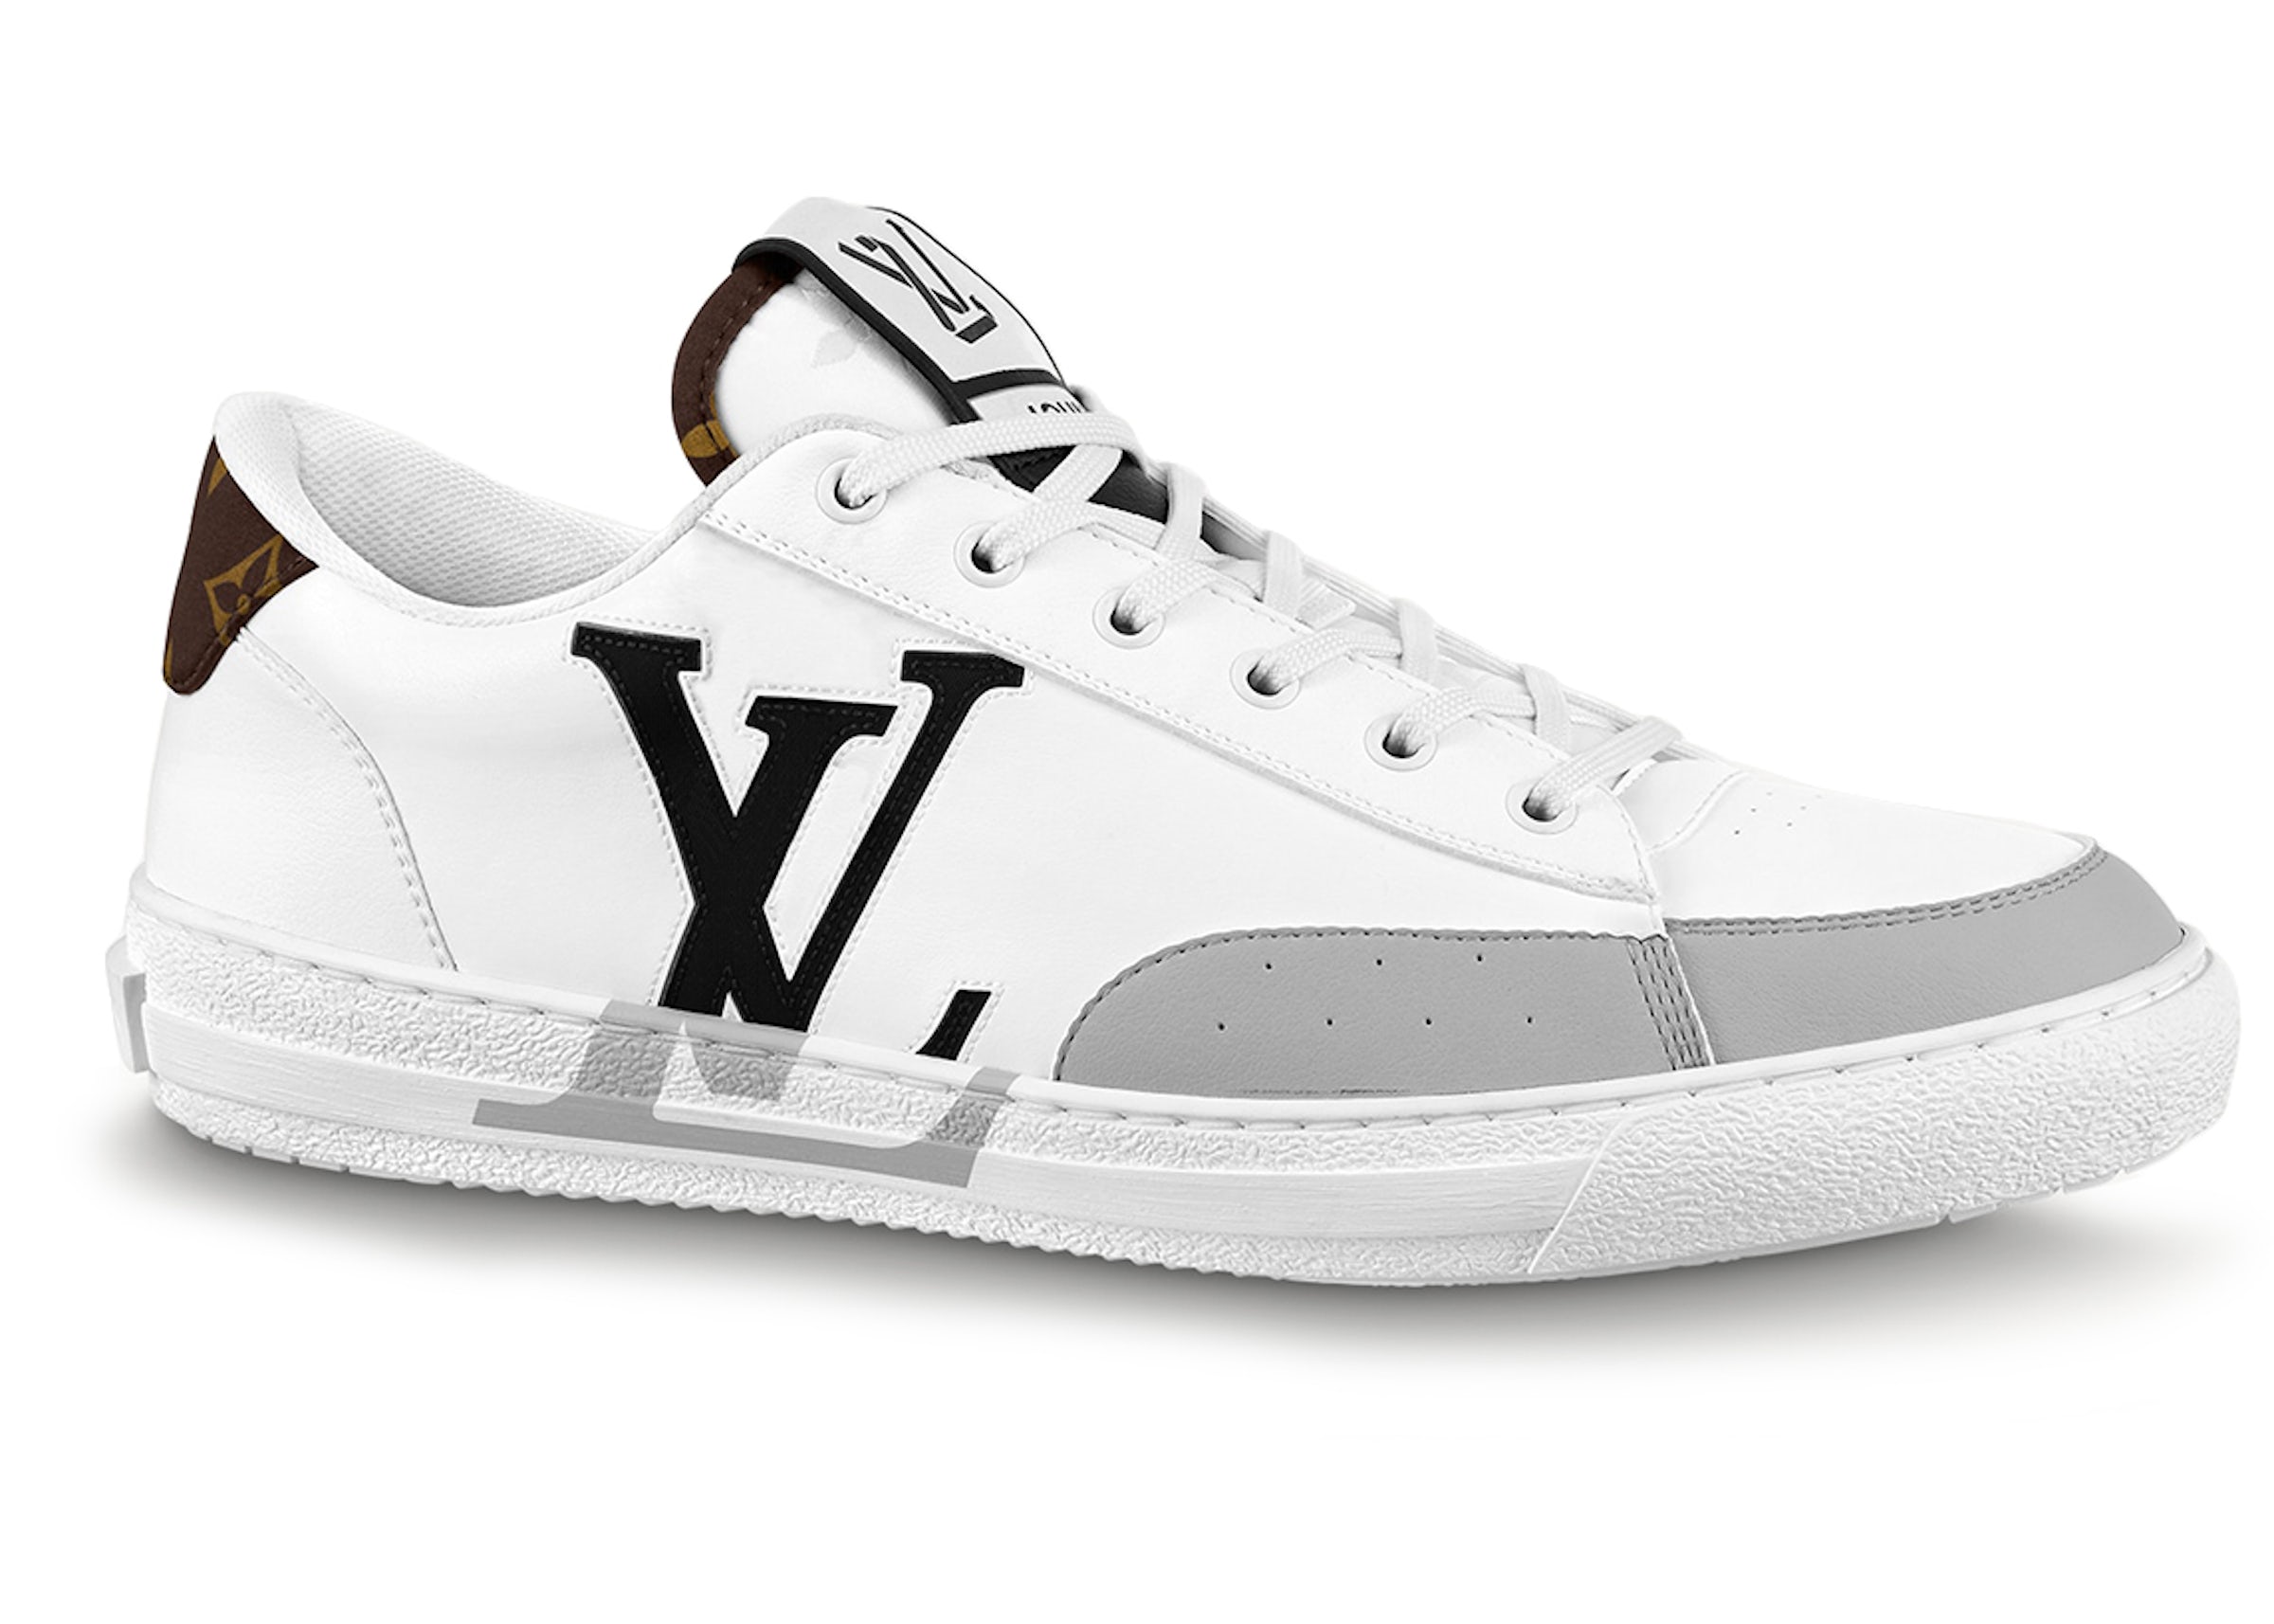 Women's Louis Vuitton Sneakers from $905